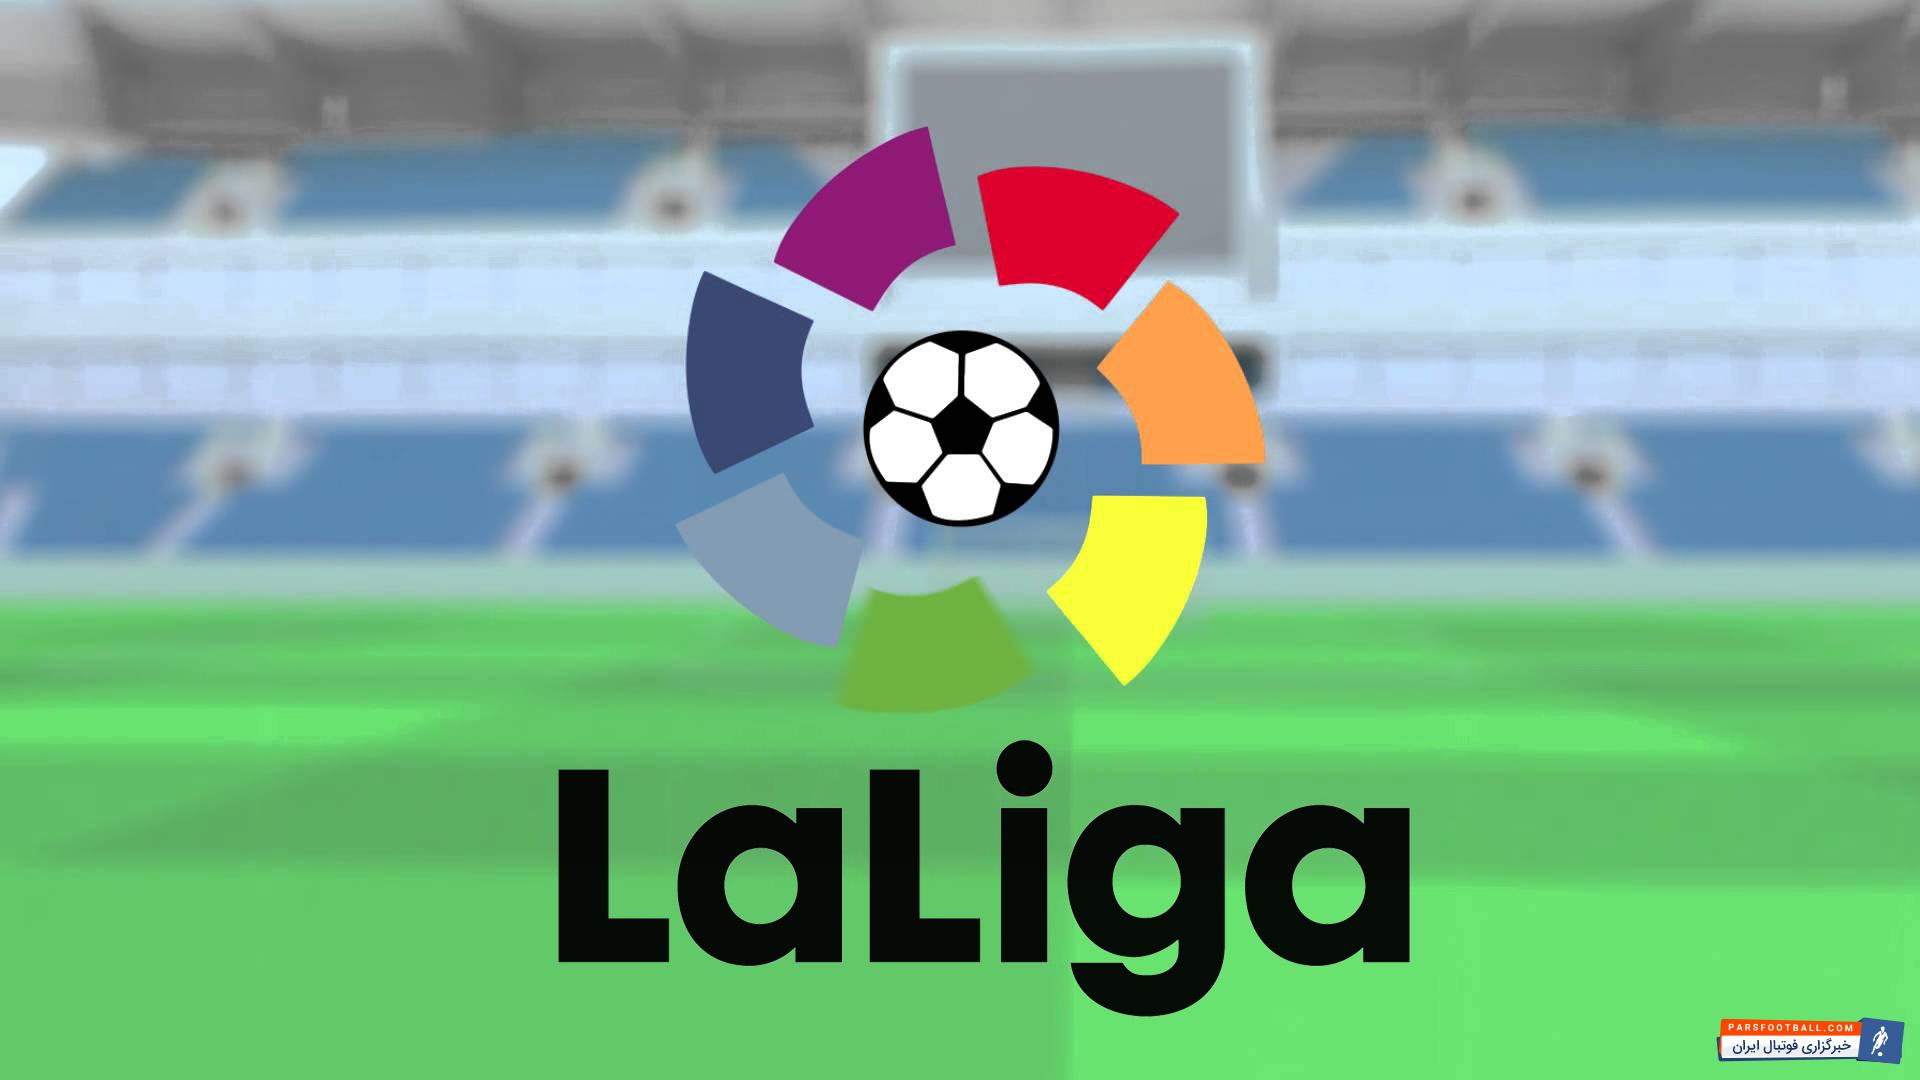 نشان قهرمانی در لالیگا بر روی پیراهن بارسلونا نشان قهرمانی در لالیگا بر روی پیراهن بارسلونا